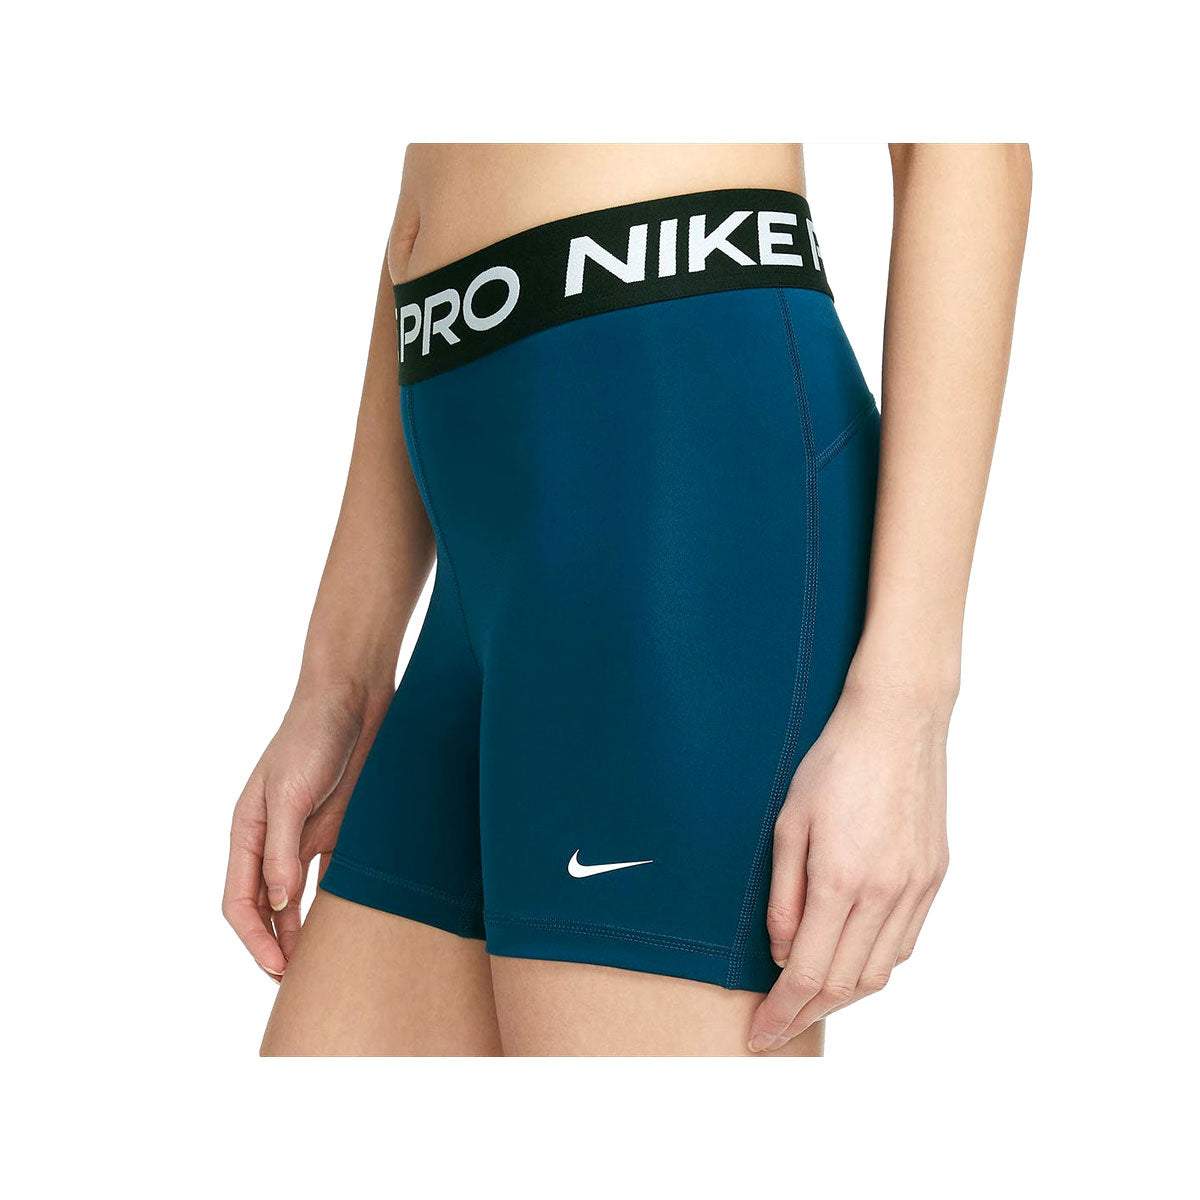 Nike Pro Women's 365 5' Inch Short Tight